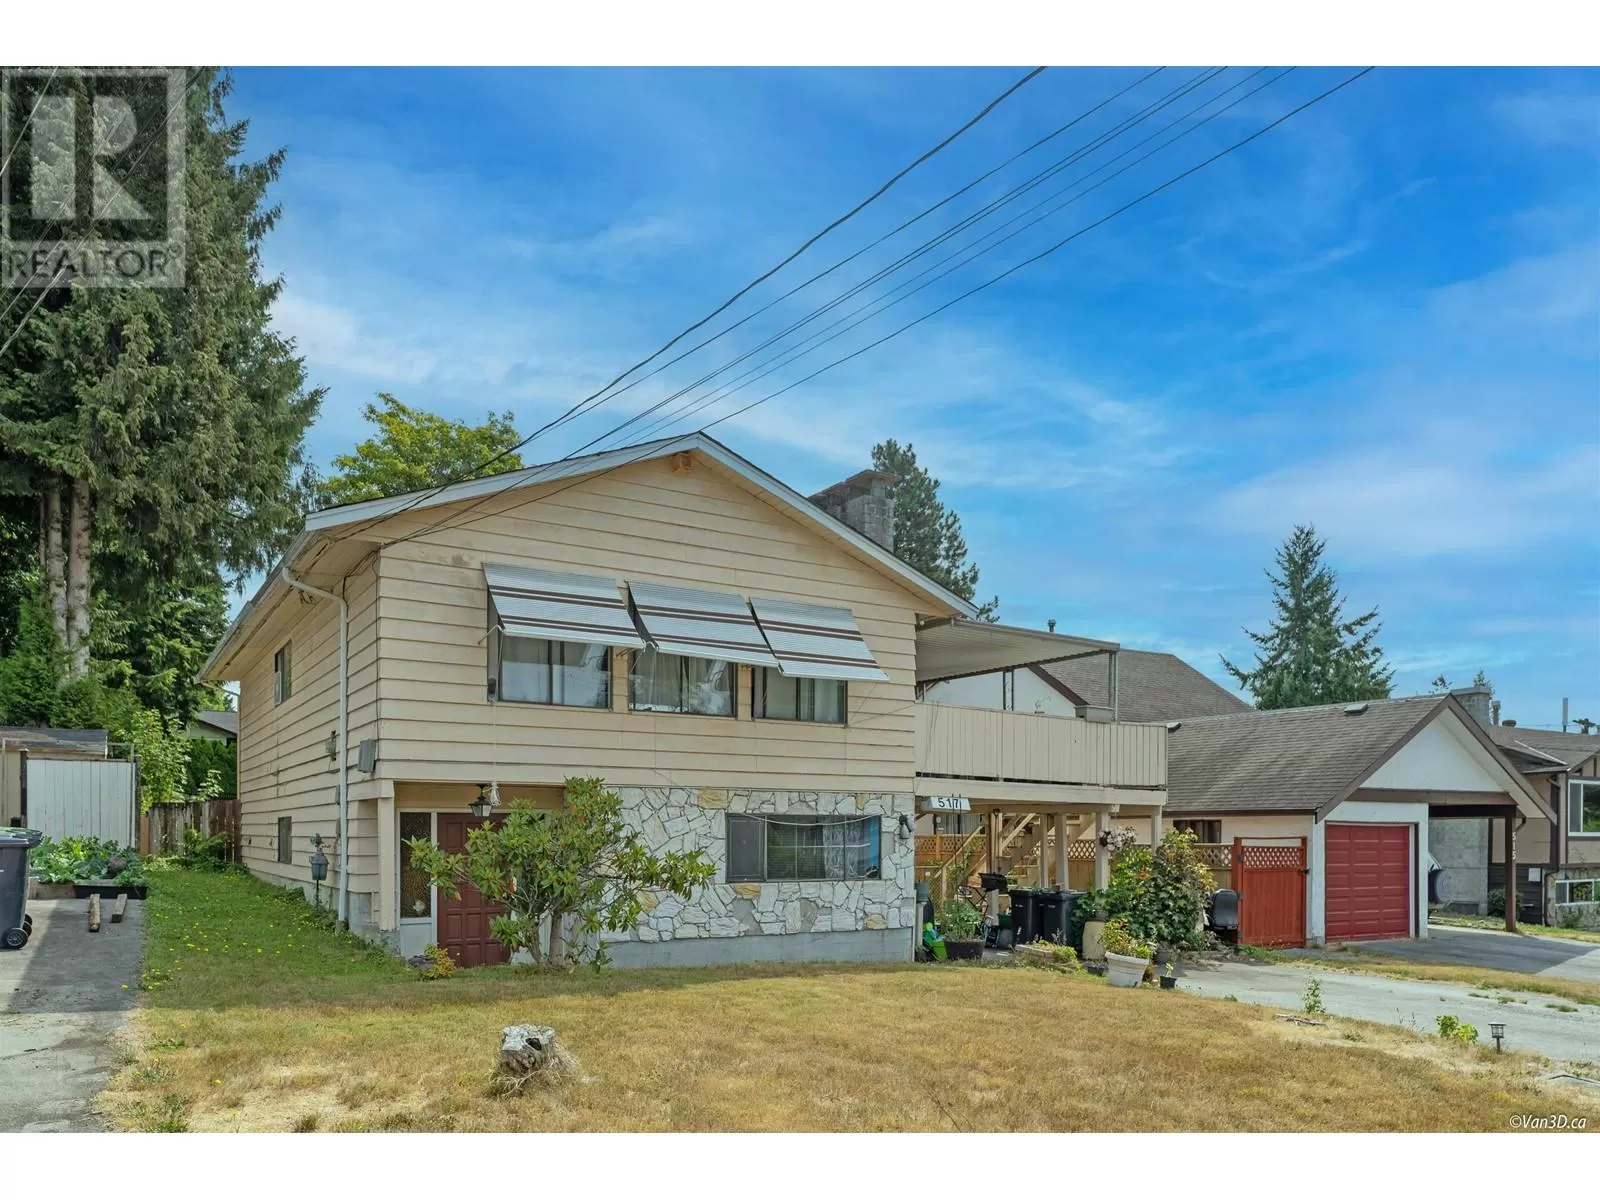 House for rent: 517 Draycott Street, Coquitlam, British Columbia V3J 6M4